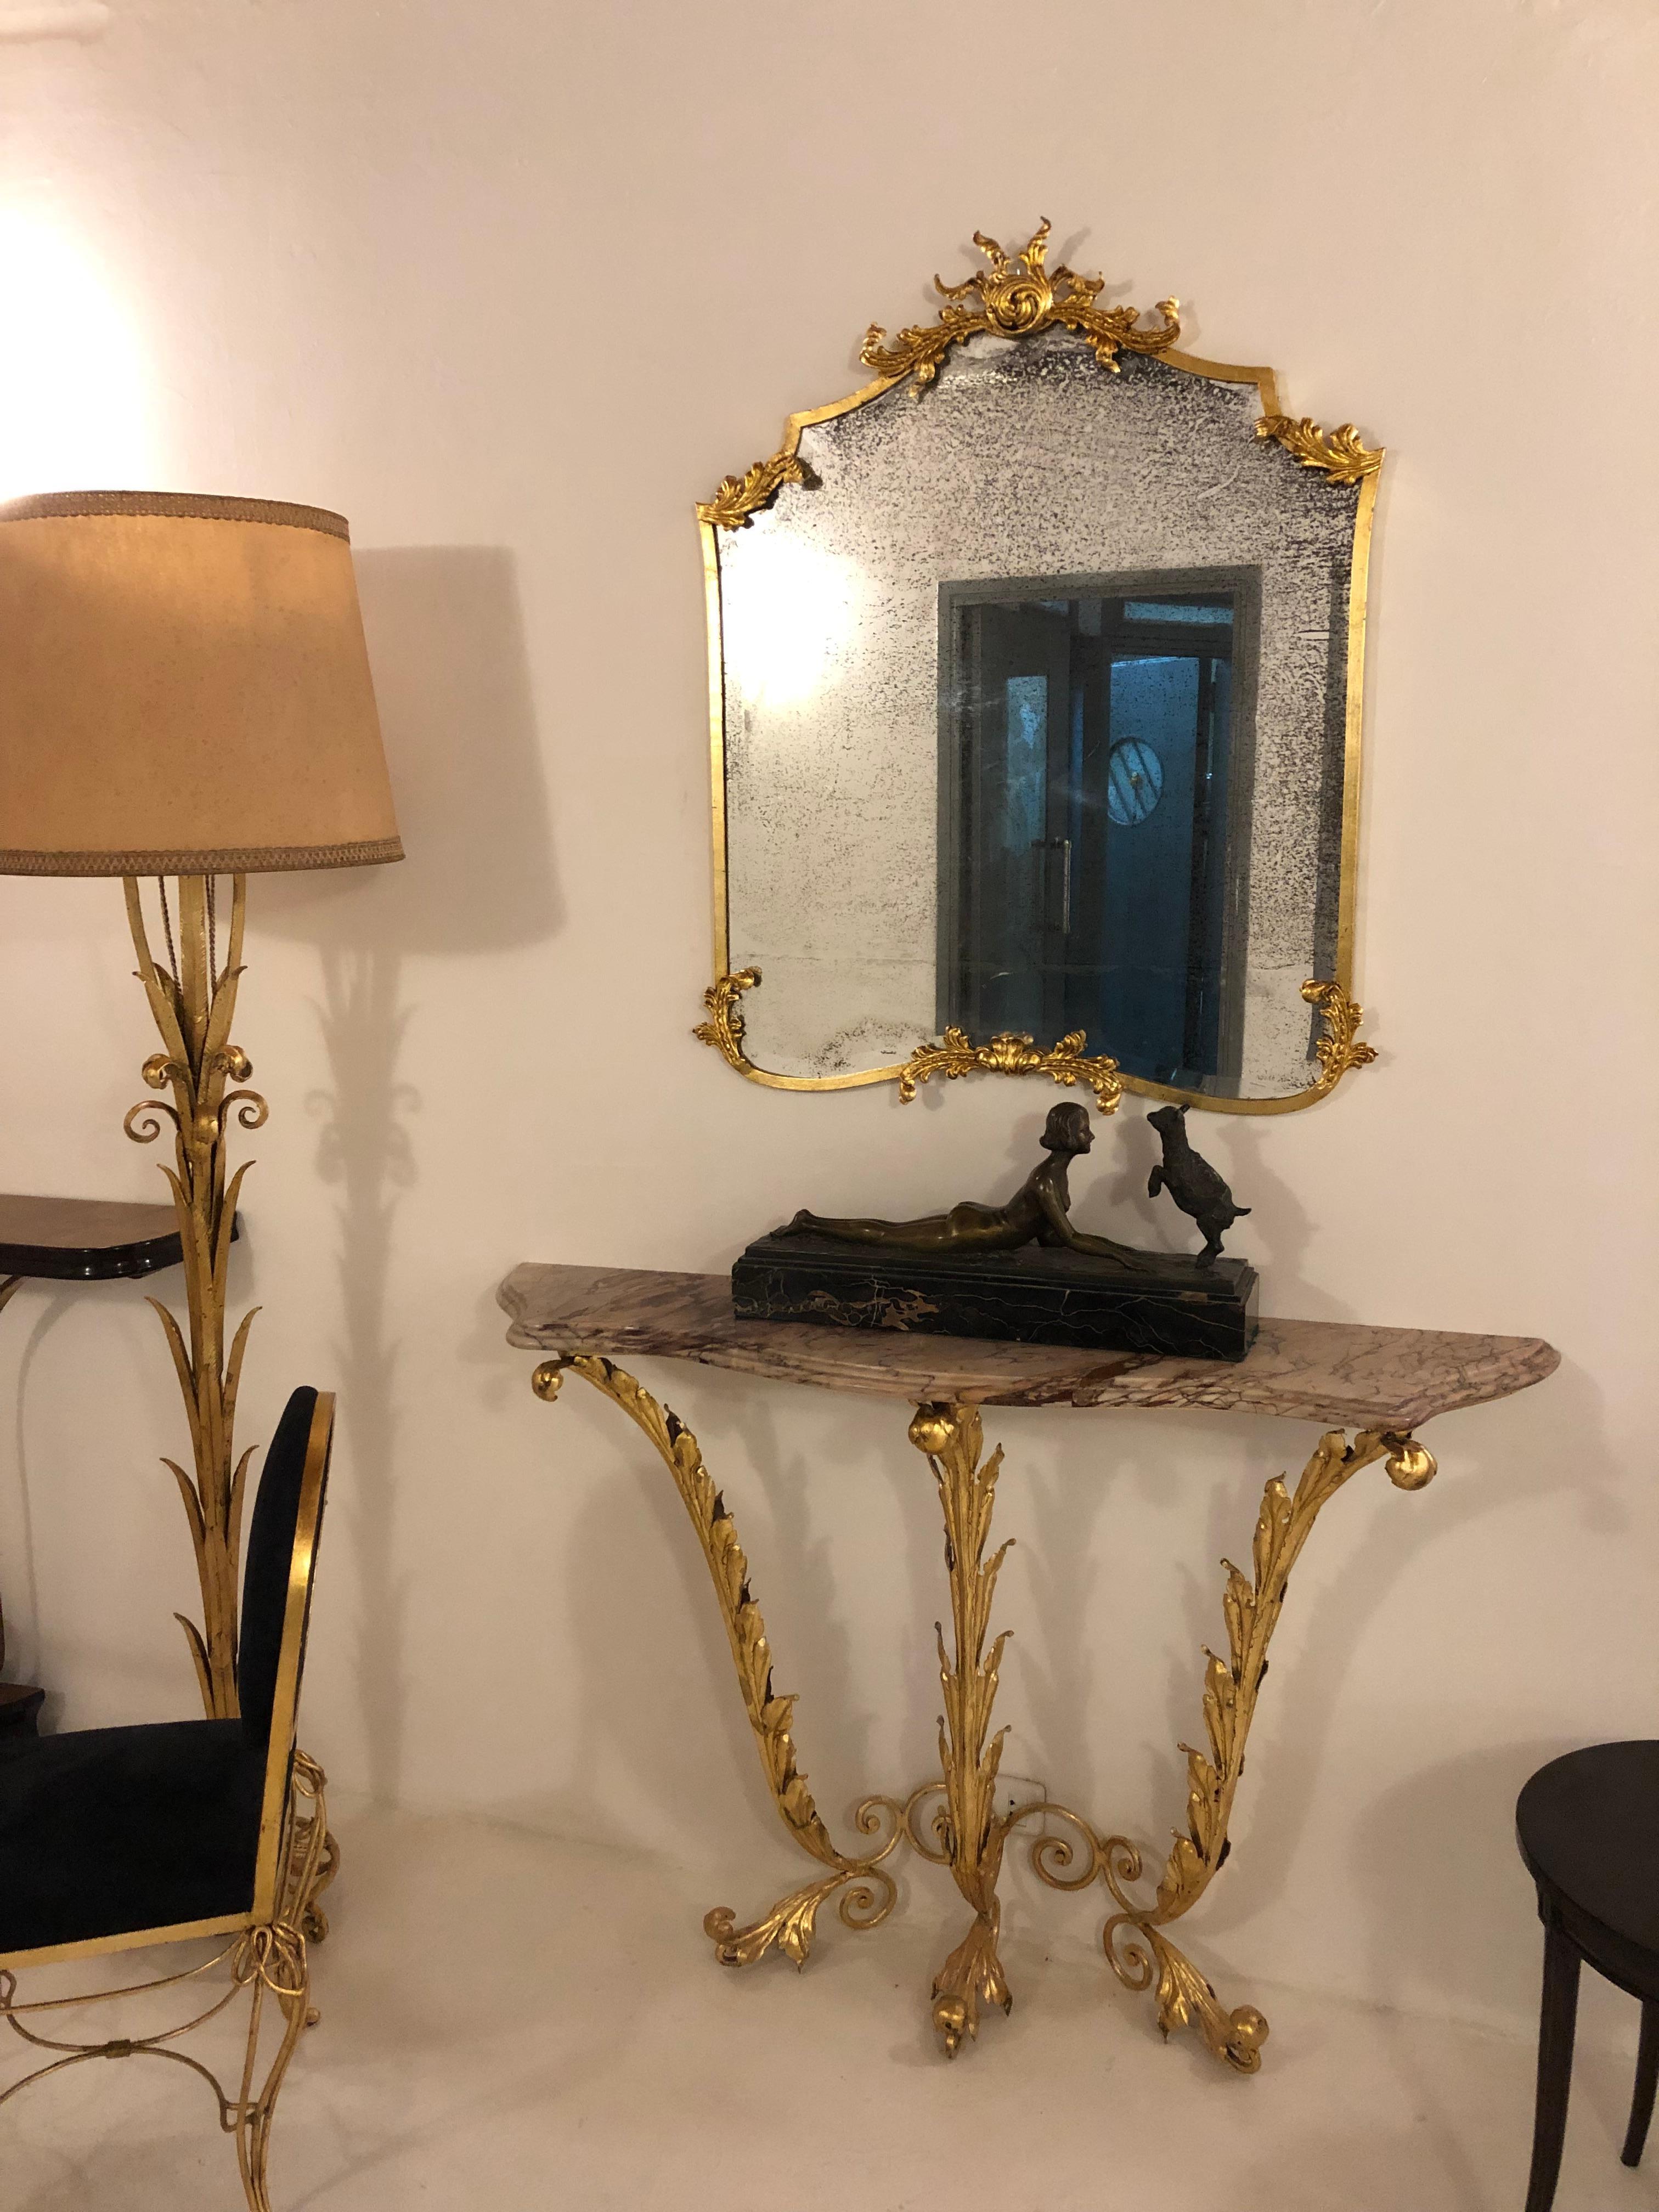 Console and mirror, Art Nouveau, Liberty

Console: 90 cm high x 137 cm long x 35 depth 
 35.43 inch high x 53.93 inch long x 13.77 inch depth

Mirror: 101.8 cm high x 86 cm long x 5 cm deep
 40.07 inch high x 33.85 cm long x 1.96 cm